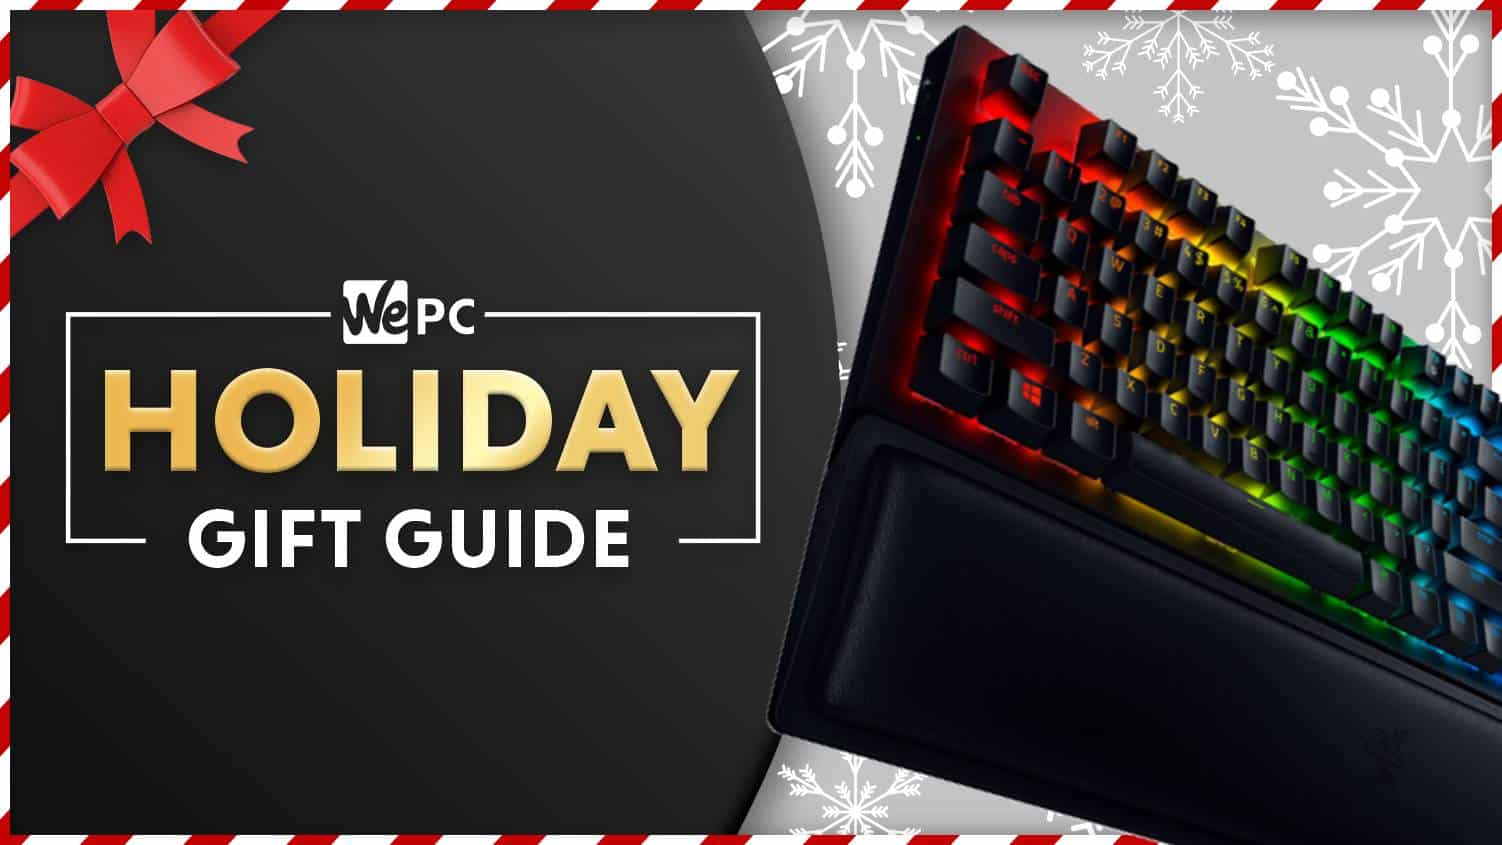 Save $40 on the Razer Blackwidow V3 clicky mechanical gaming keyboard this Holiday Season